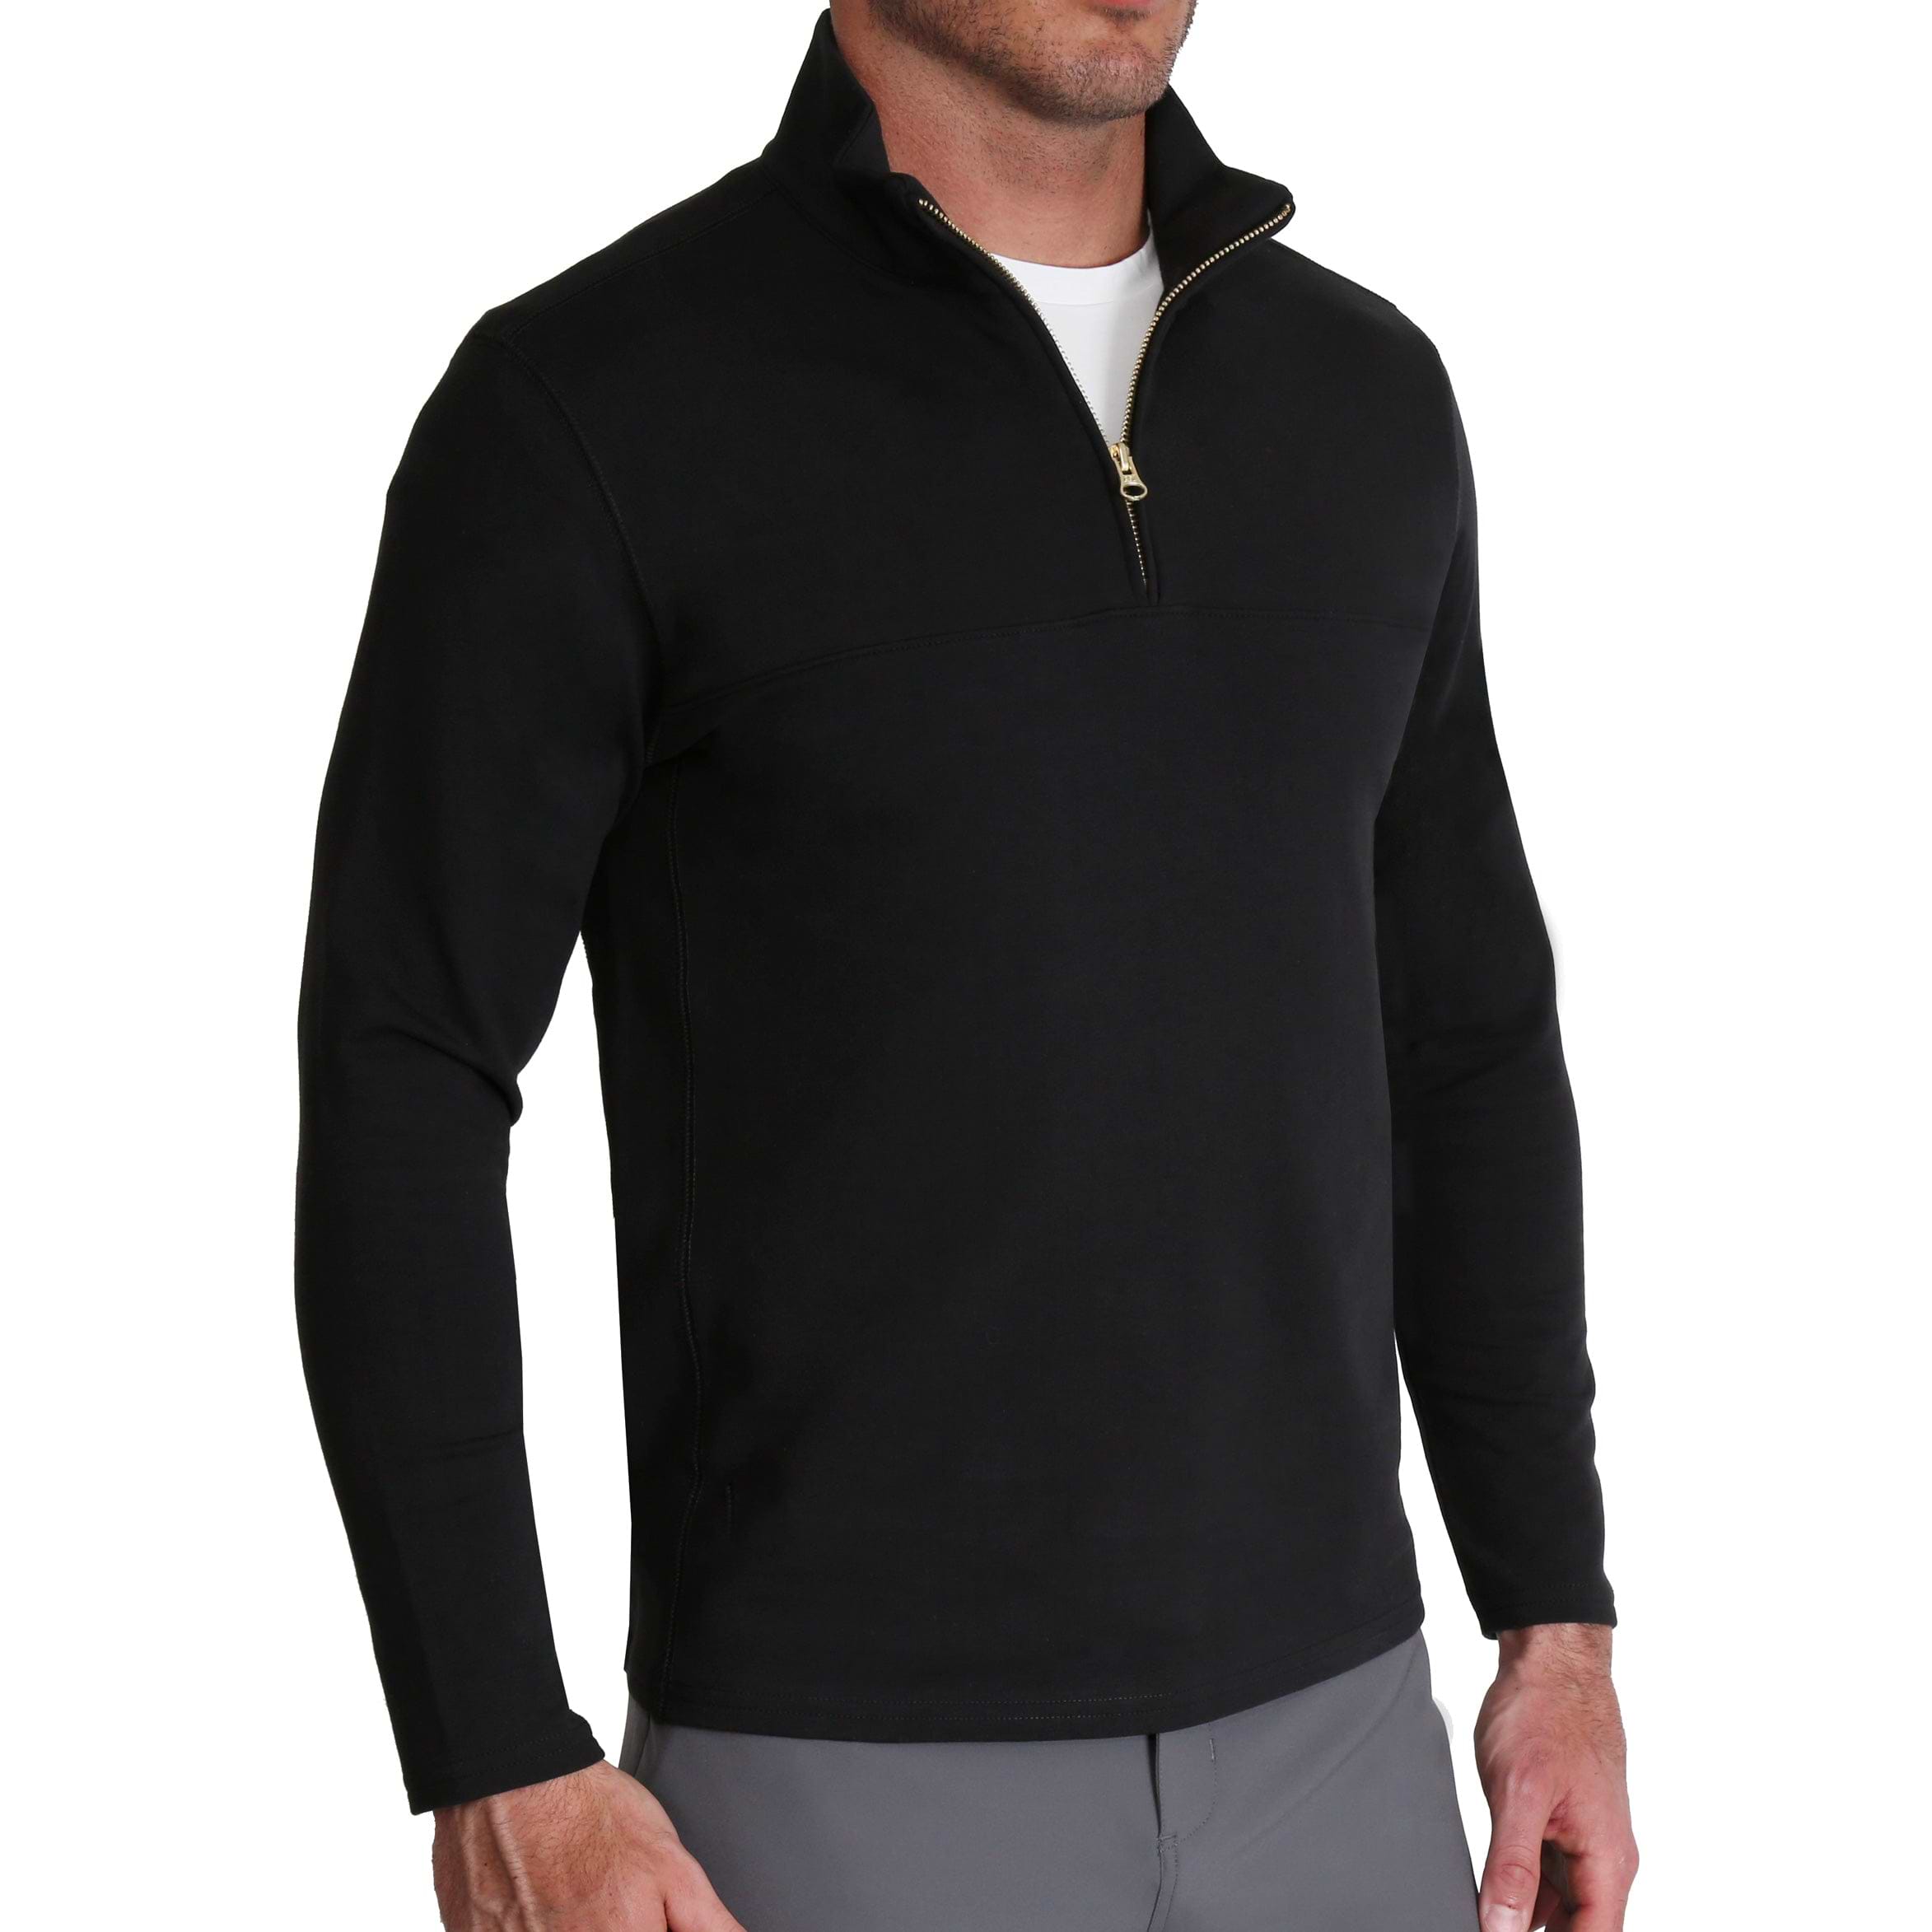 Tek Gear Performance Fleece pullover mens L black long sleeve top